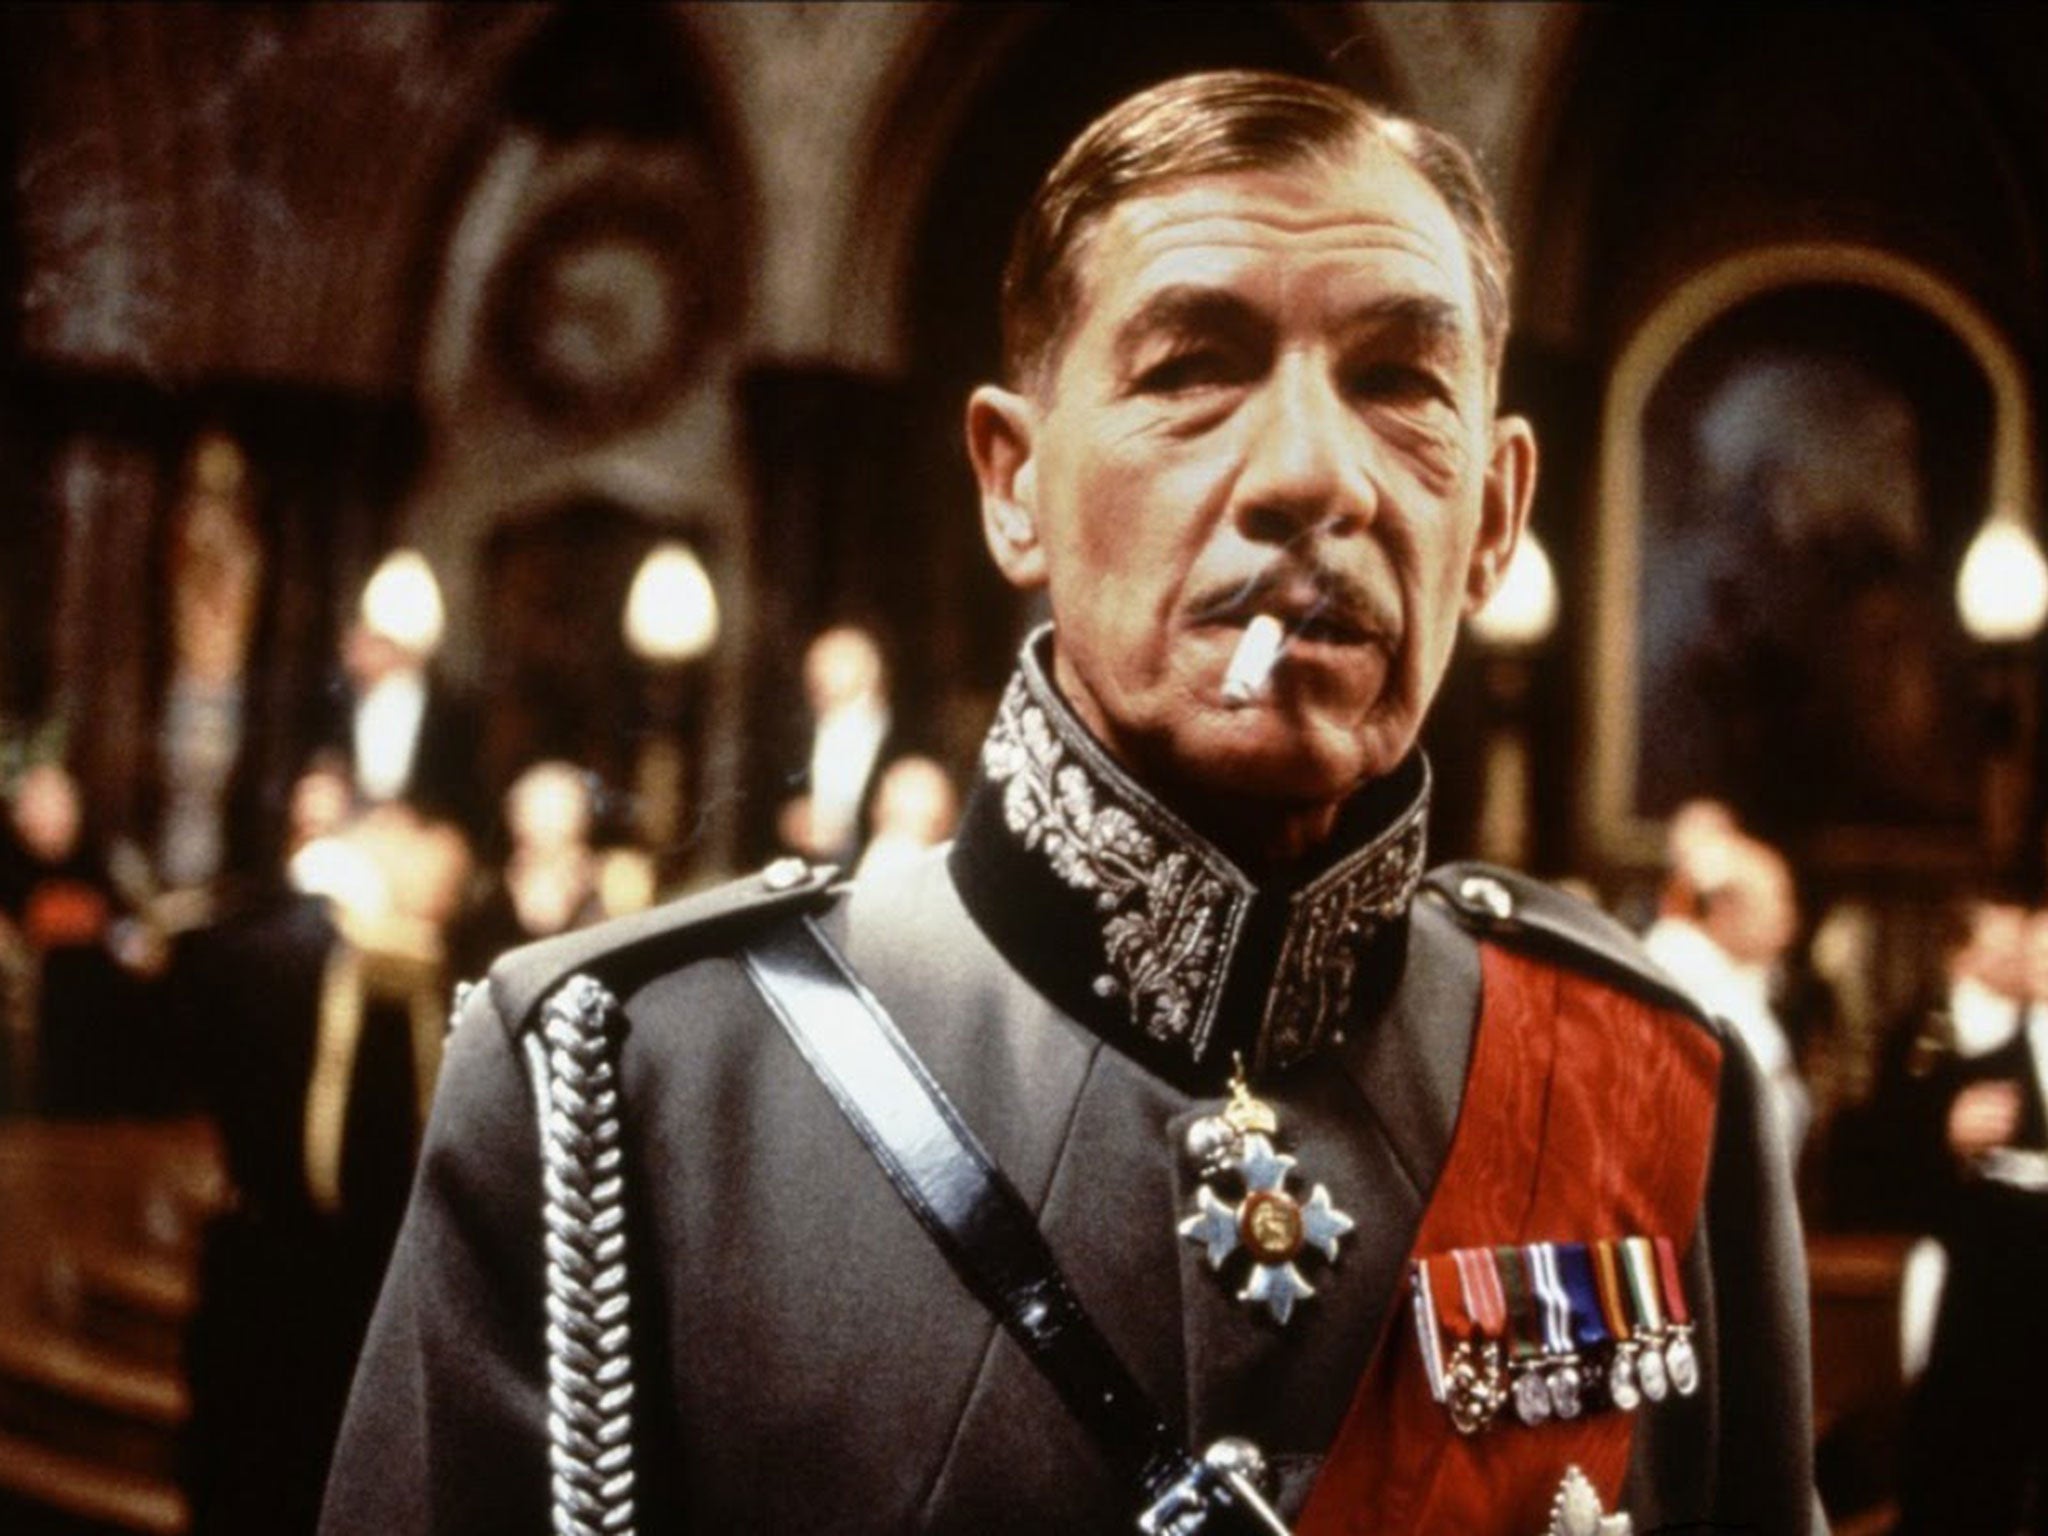 Sir Ian McKellen as Richard III in the 1995 film directed by Richard Loncraine